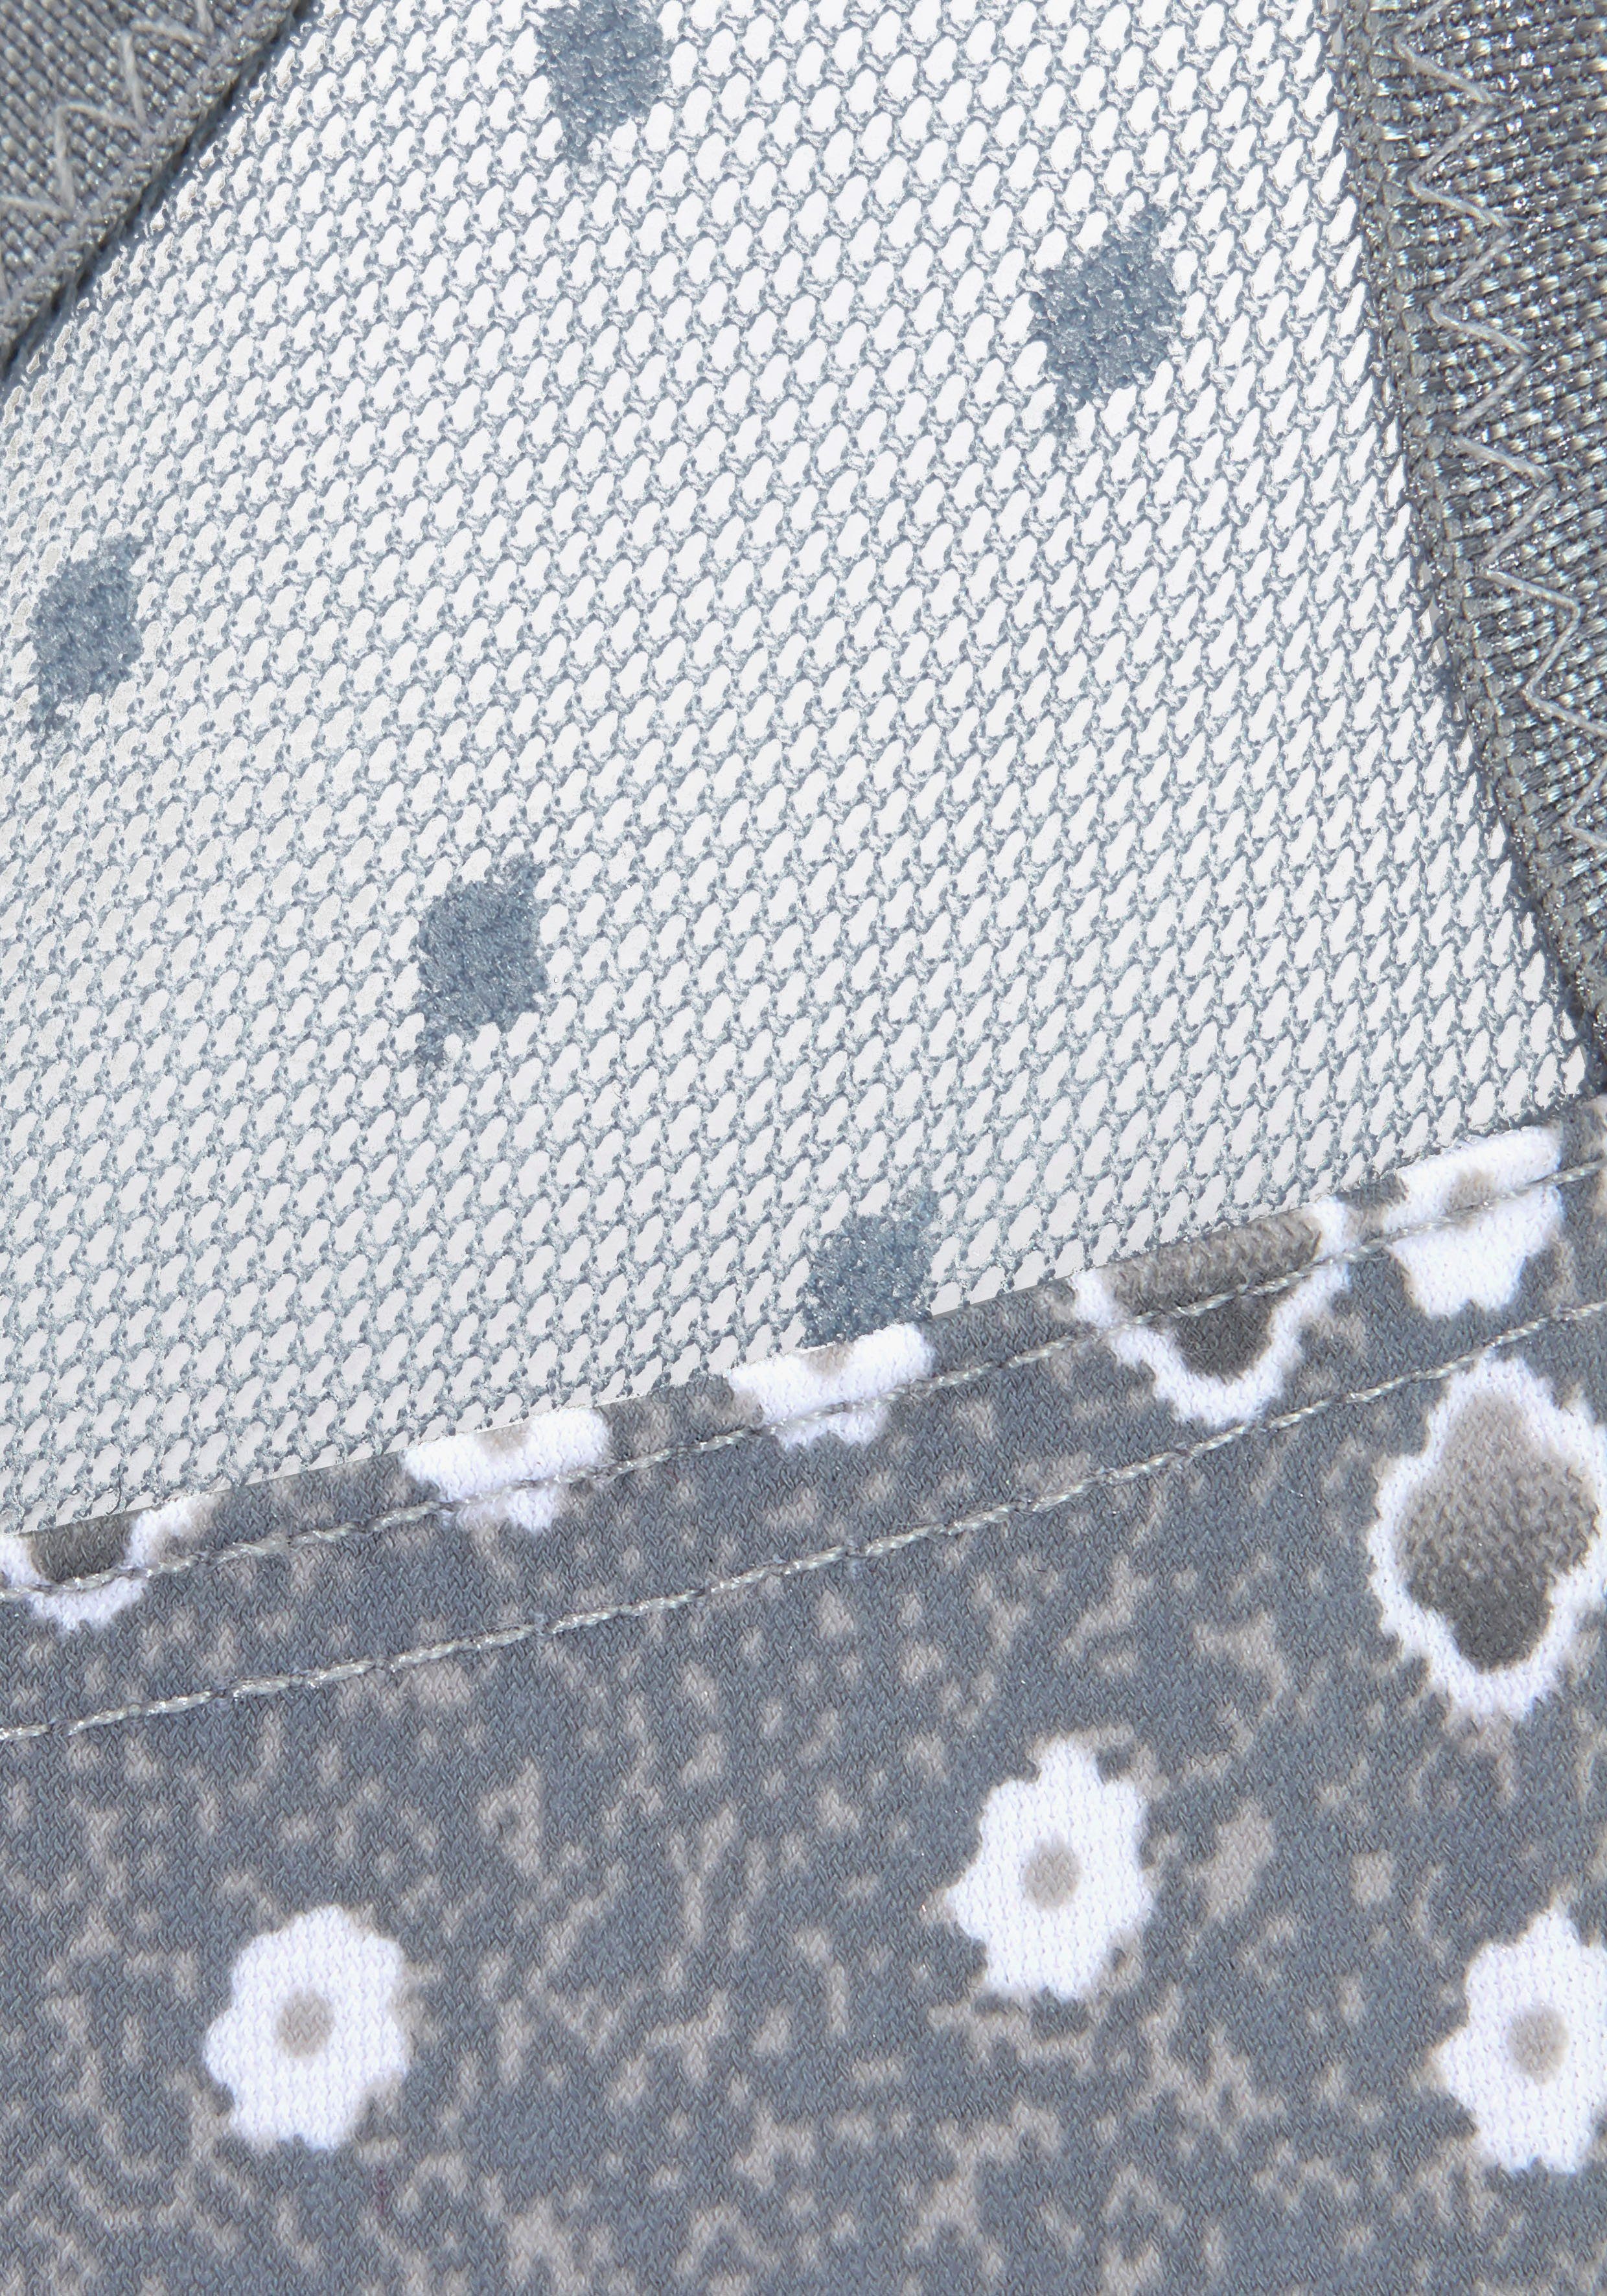 Minimizer-BH Tüll Bügel Obercup, transparentem Dessous und Basic im Nuance mit grau-bedruckt leicht